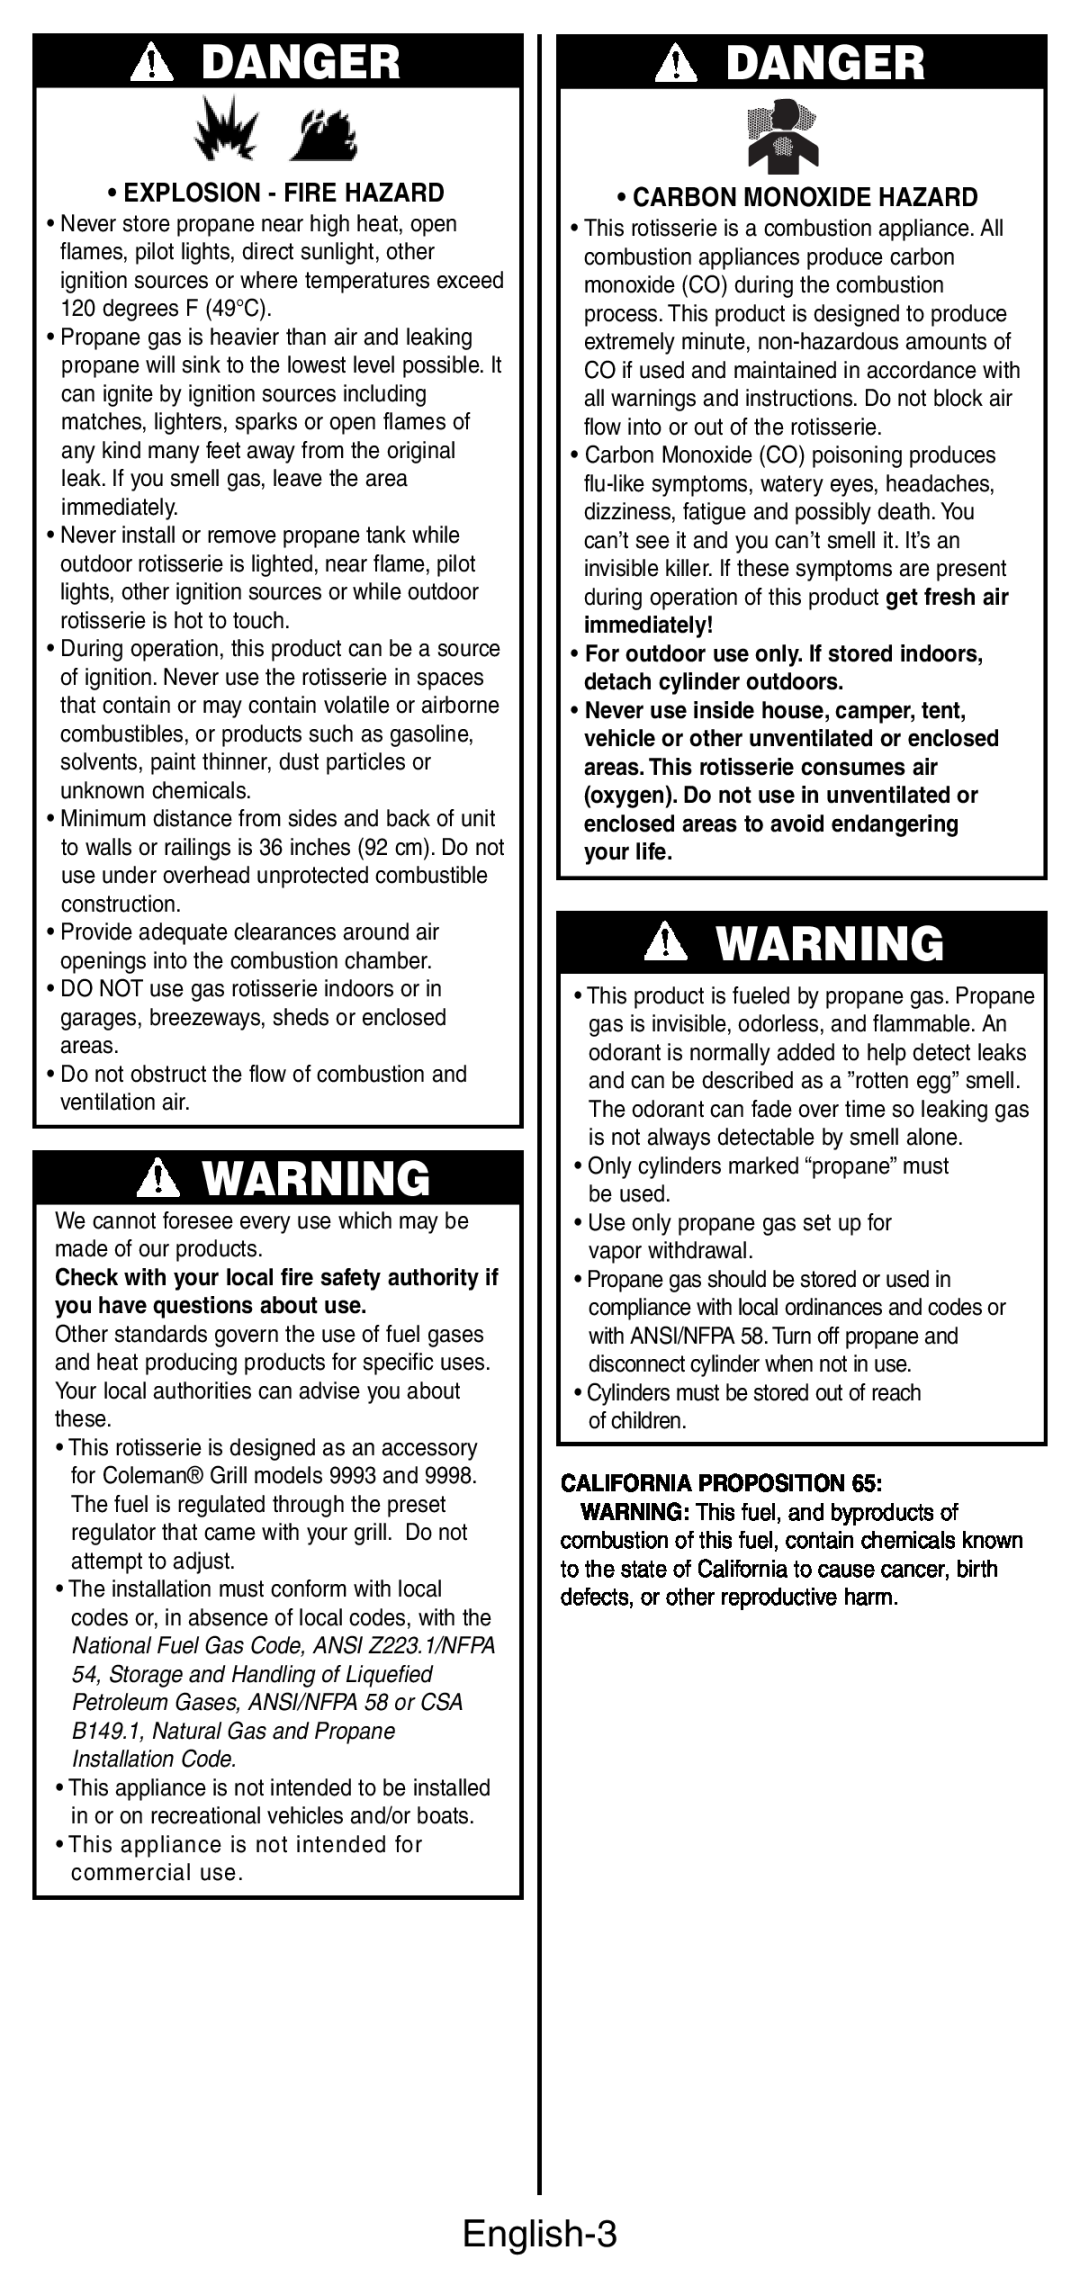 Coleman 9987 Series instruction manual Danger, English-3, Explosion - Fire Hazard, Carbon Monoxide Hazard 